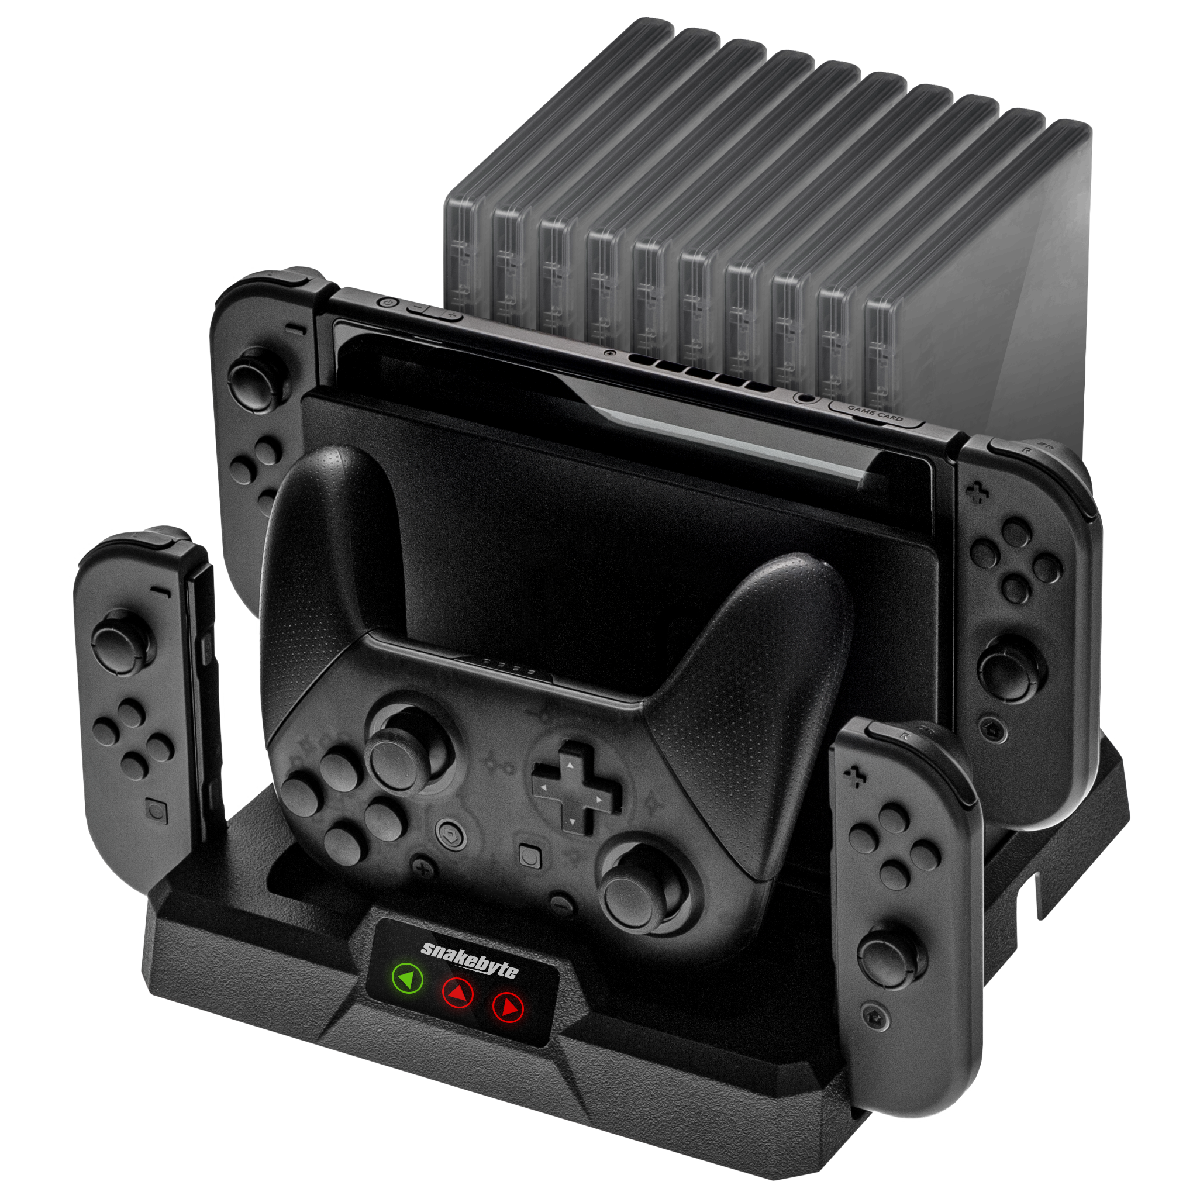 snakebyte - Station de charge PlayStation 5 pour manettes